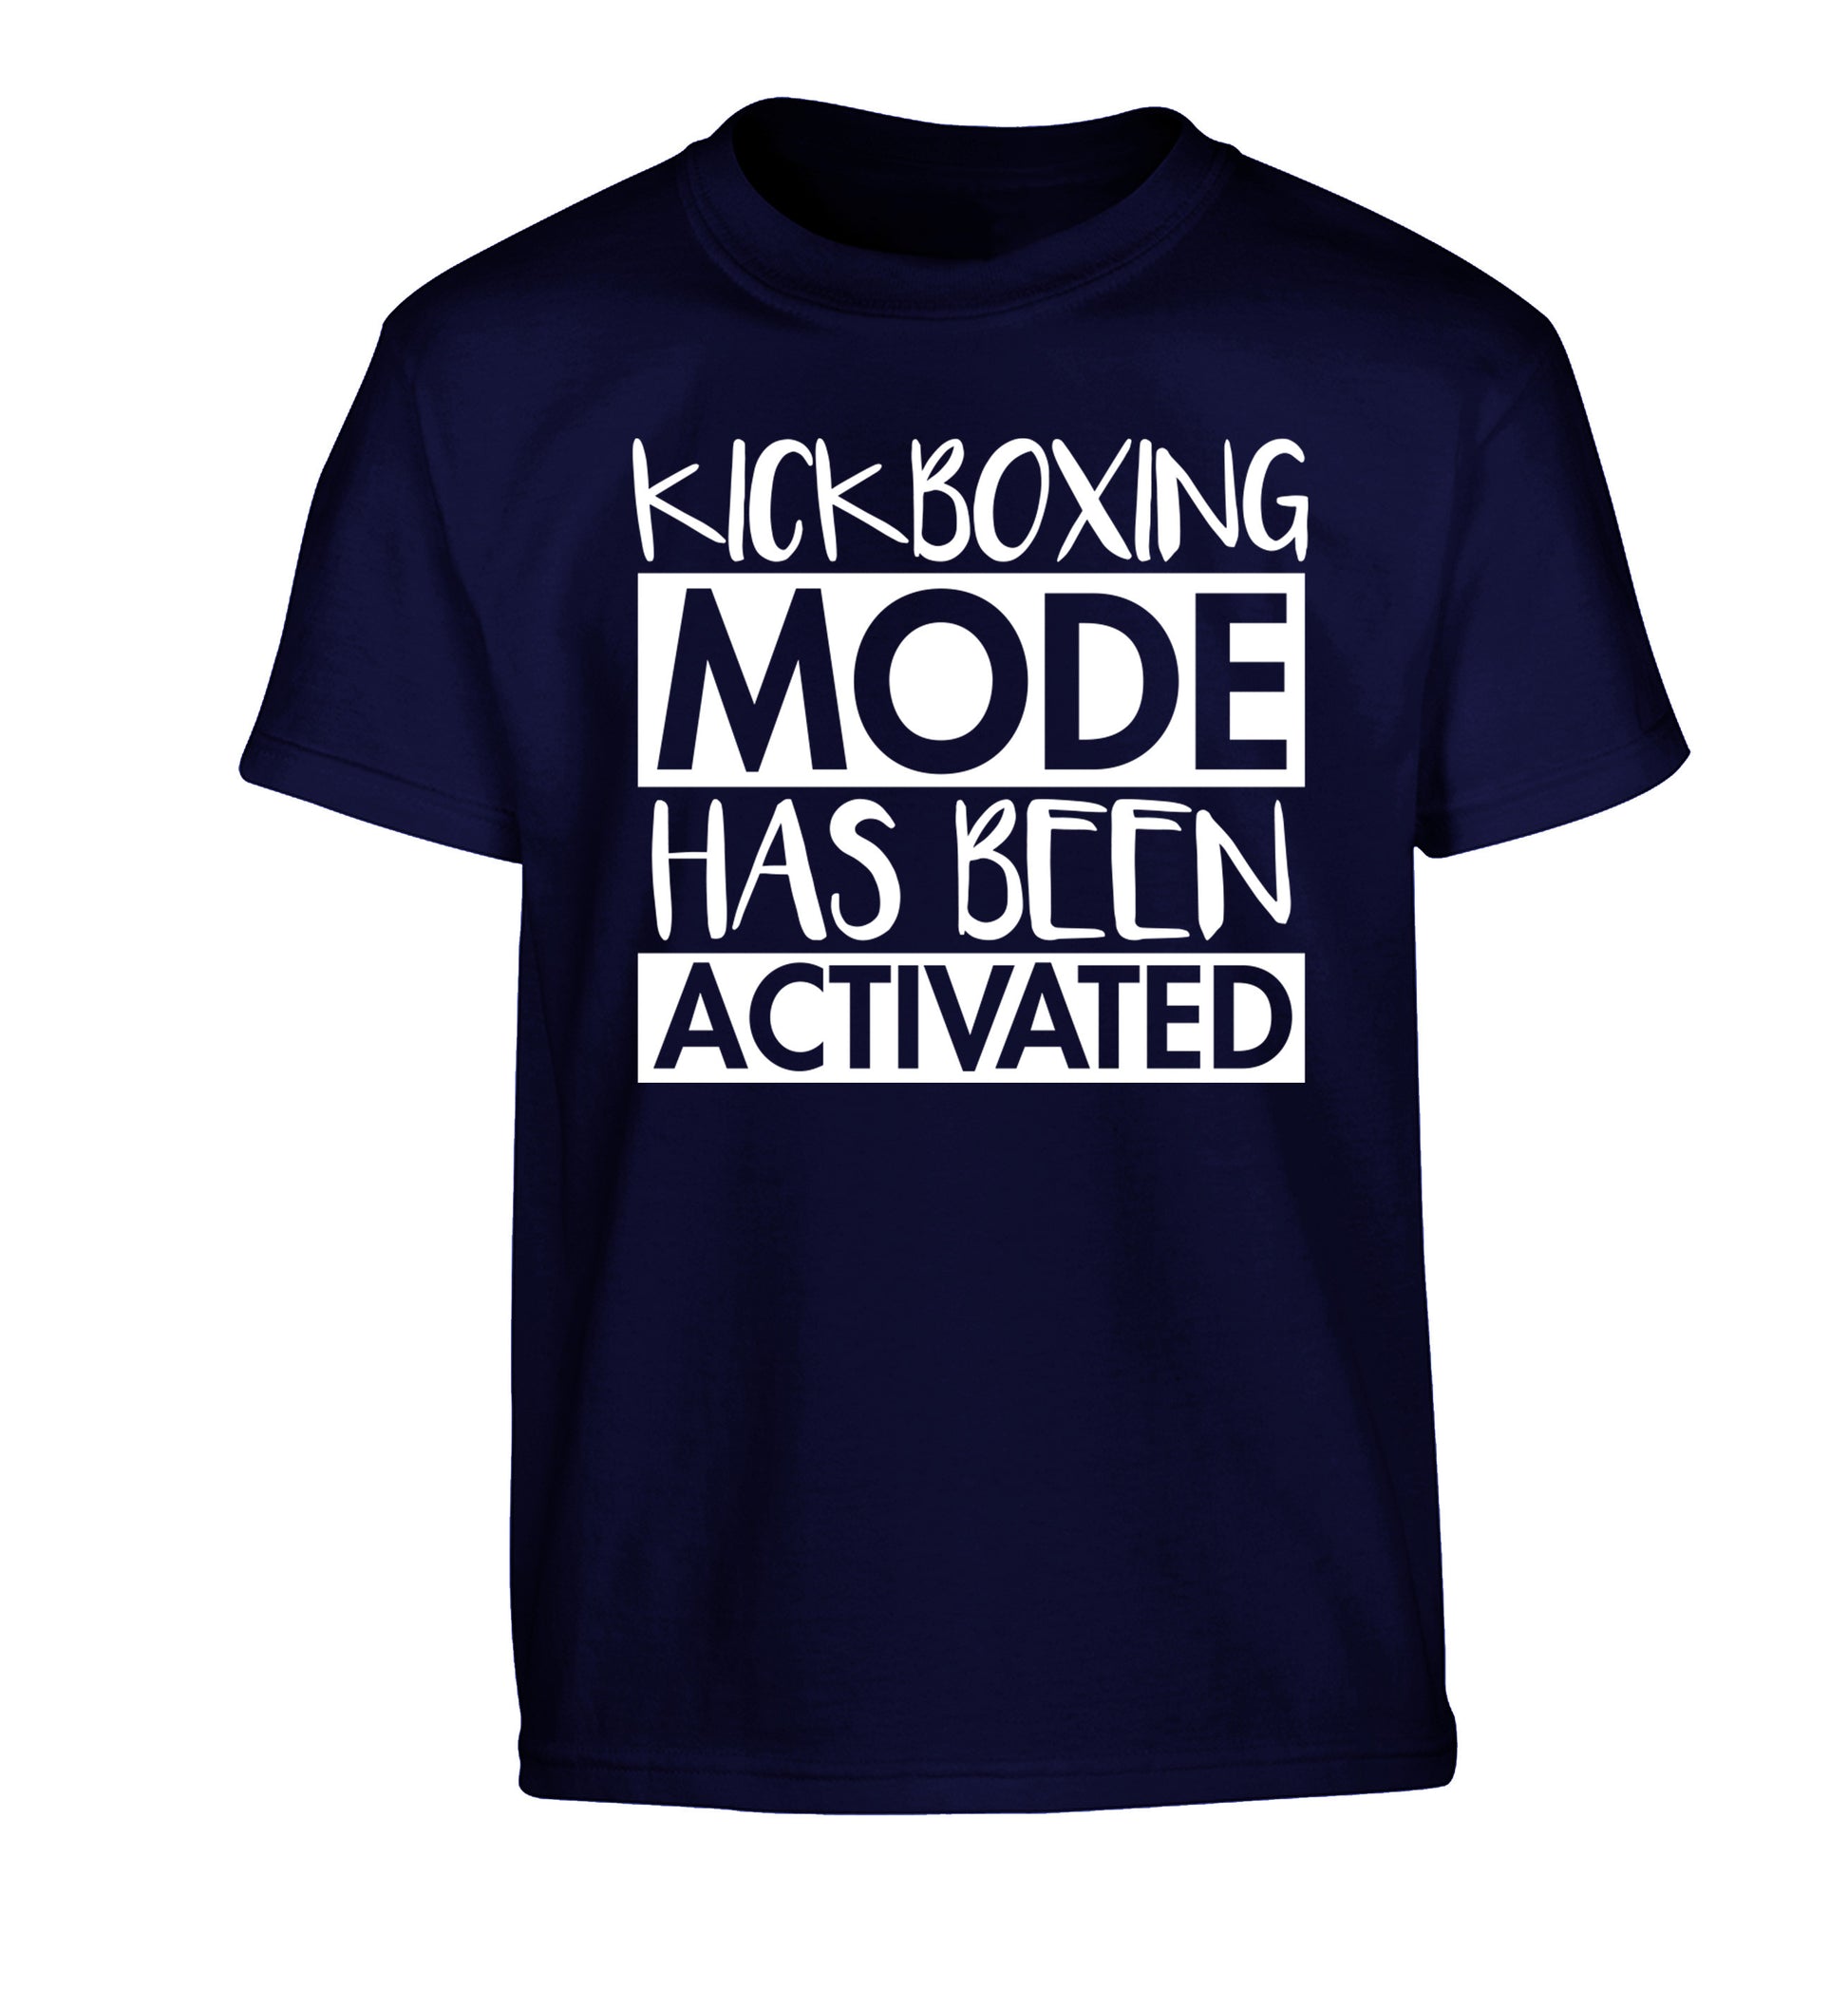 Kickboxing mode activated Children's navy Tshirt 12-14 Years